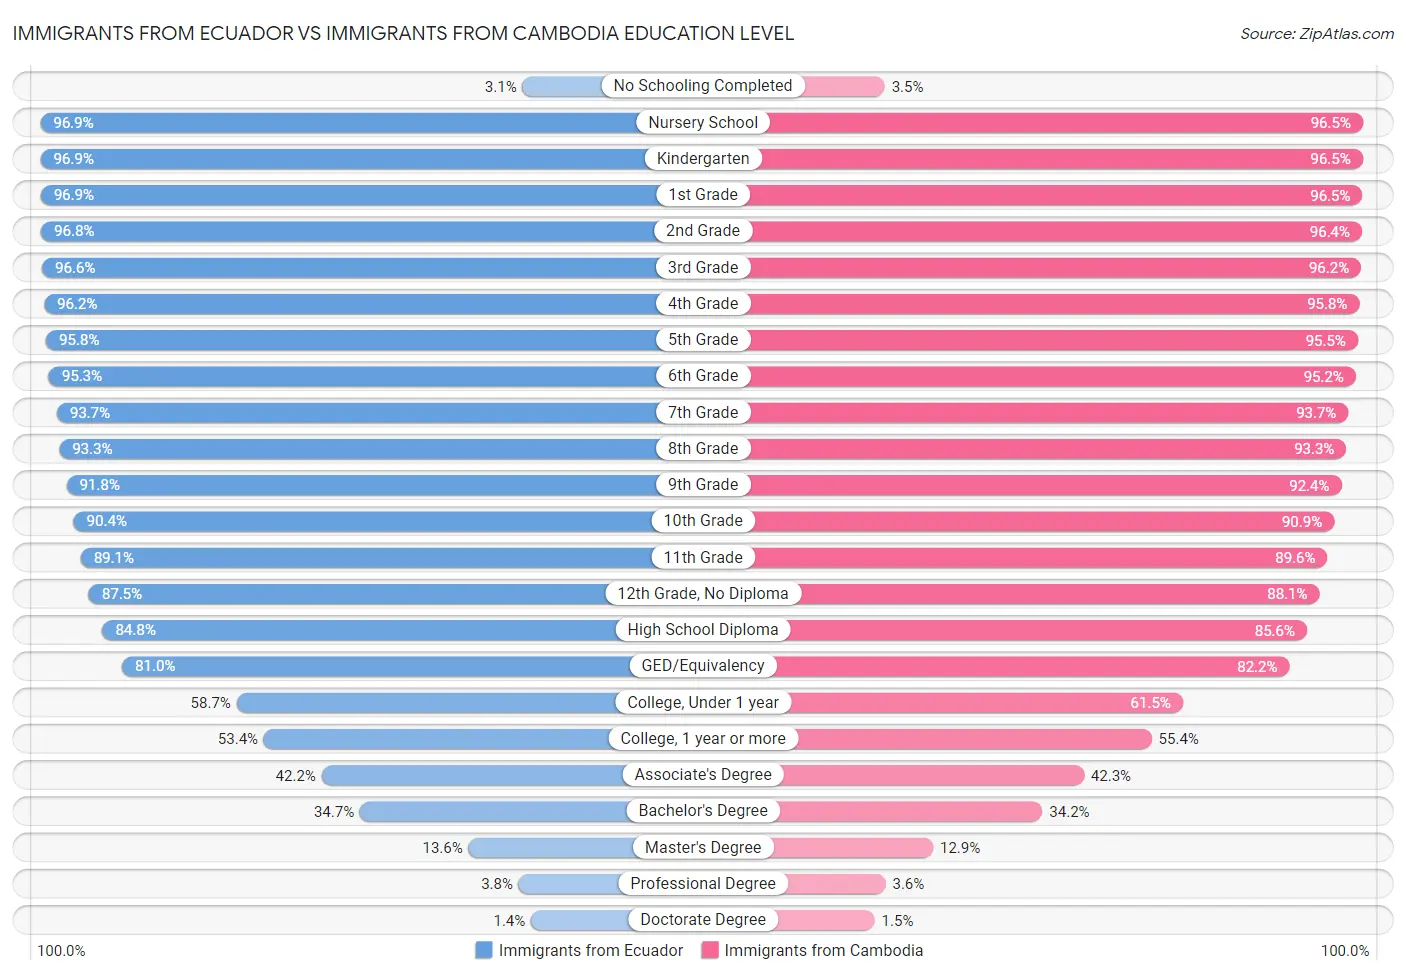 Immigrants from Ecuador vs Immigrants from Cambodia Education Level